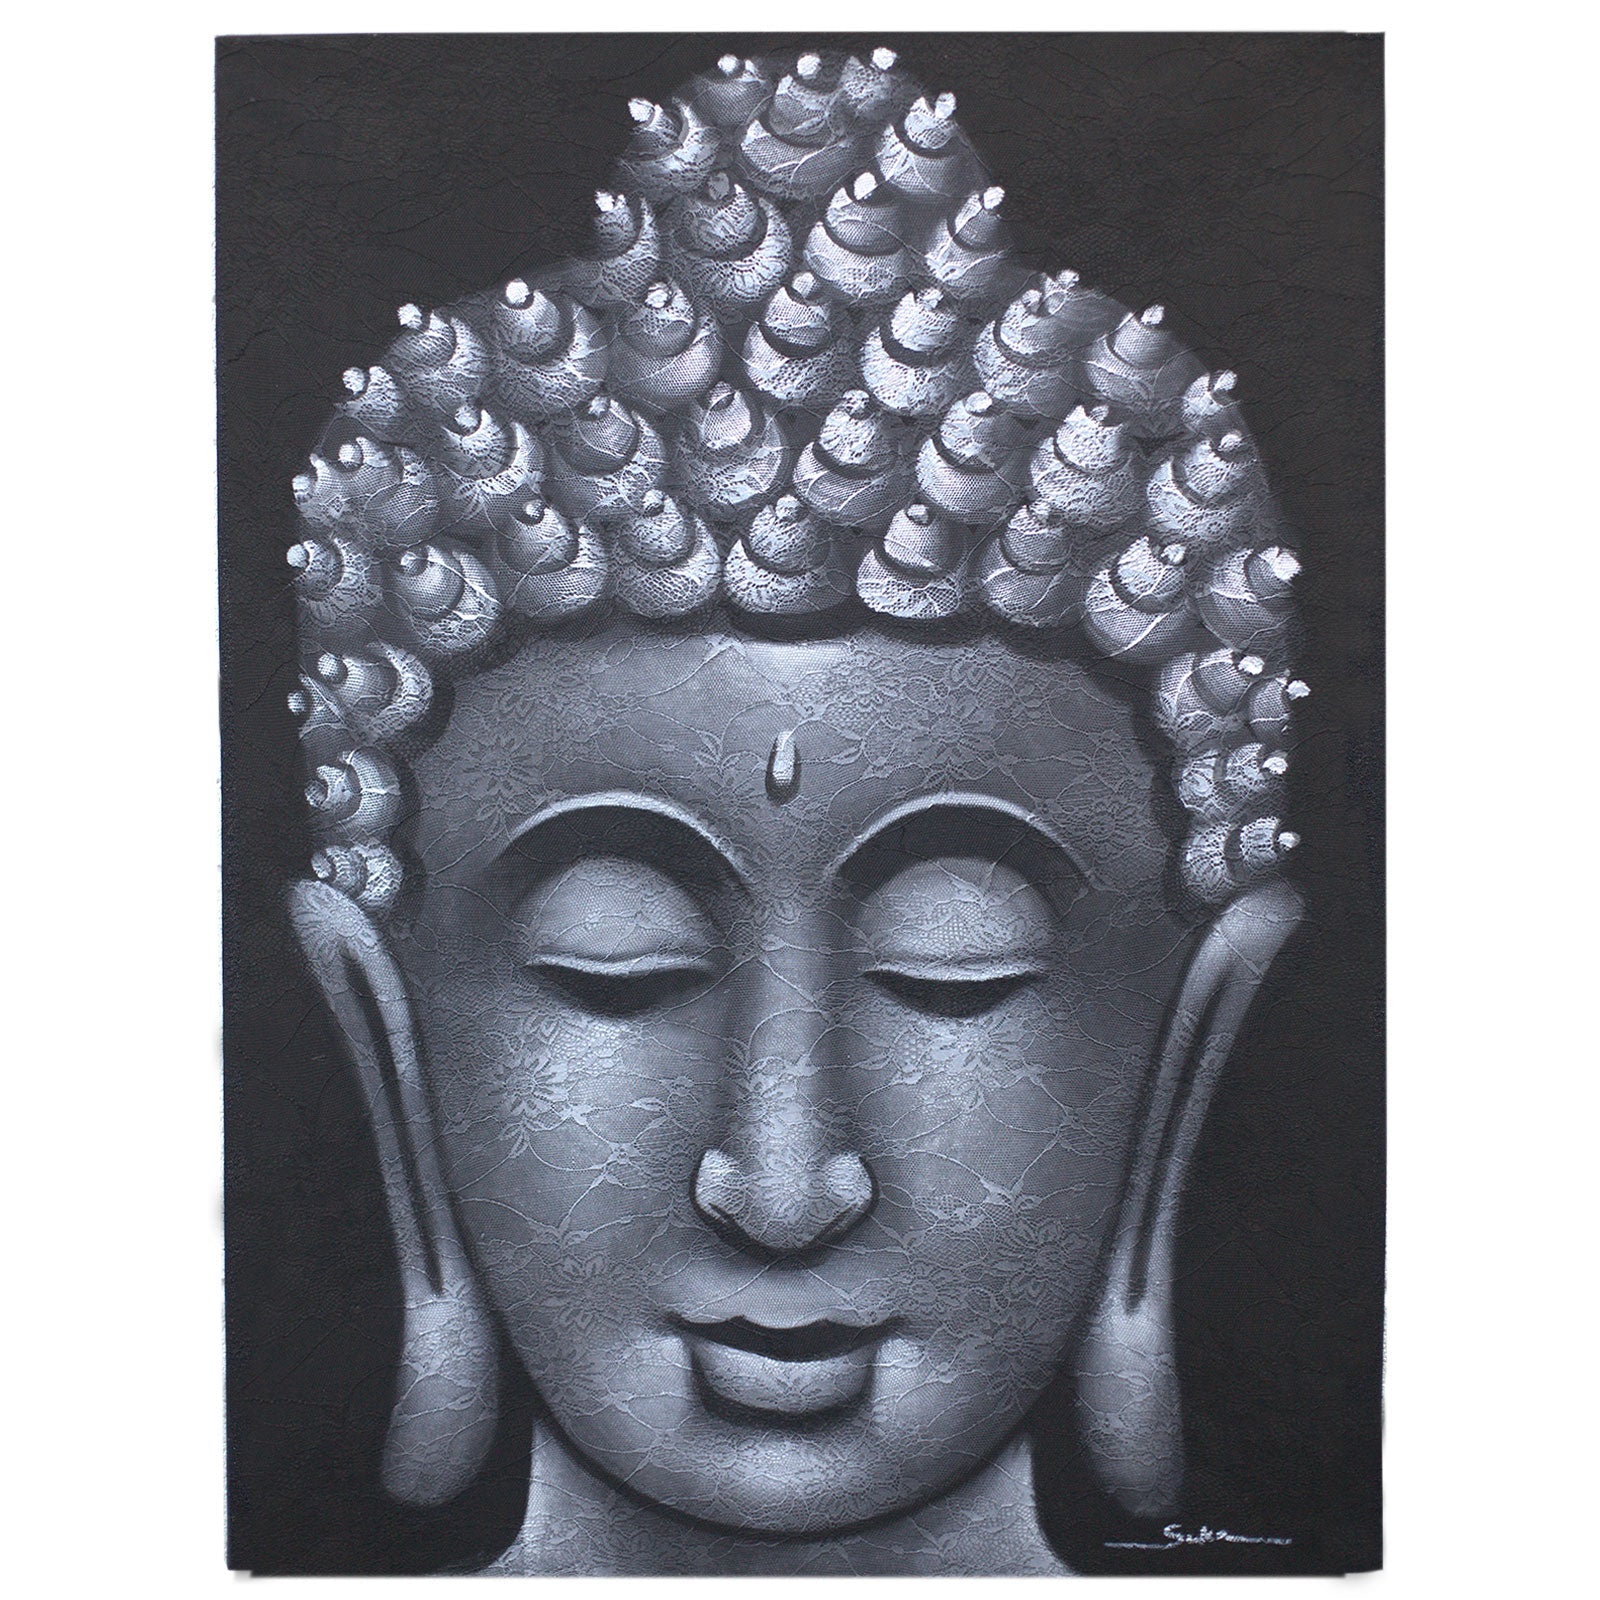 View Buddha Painting Grey Brocade Detail information